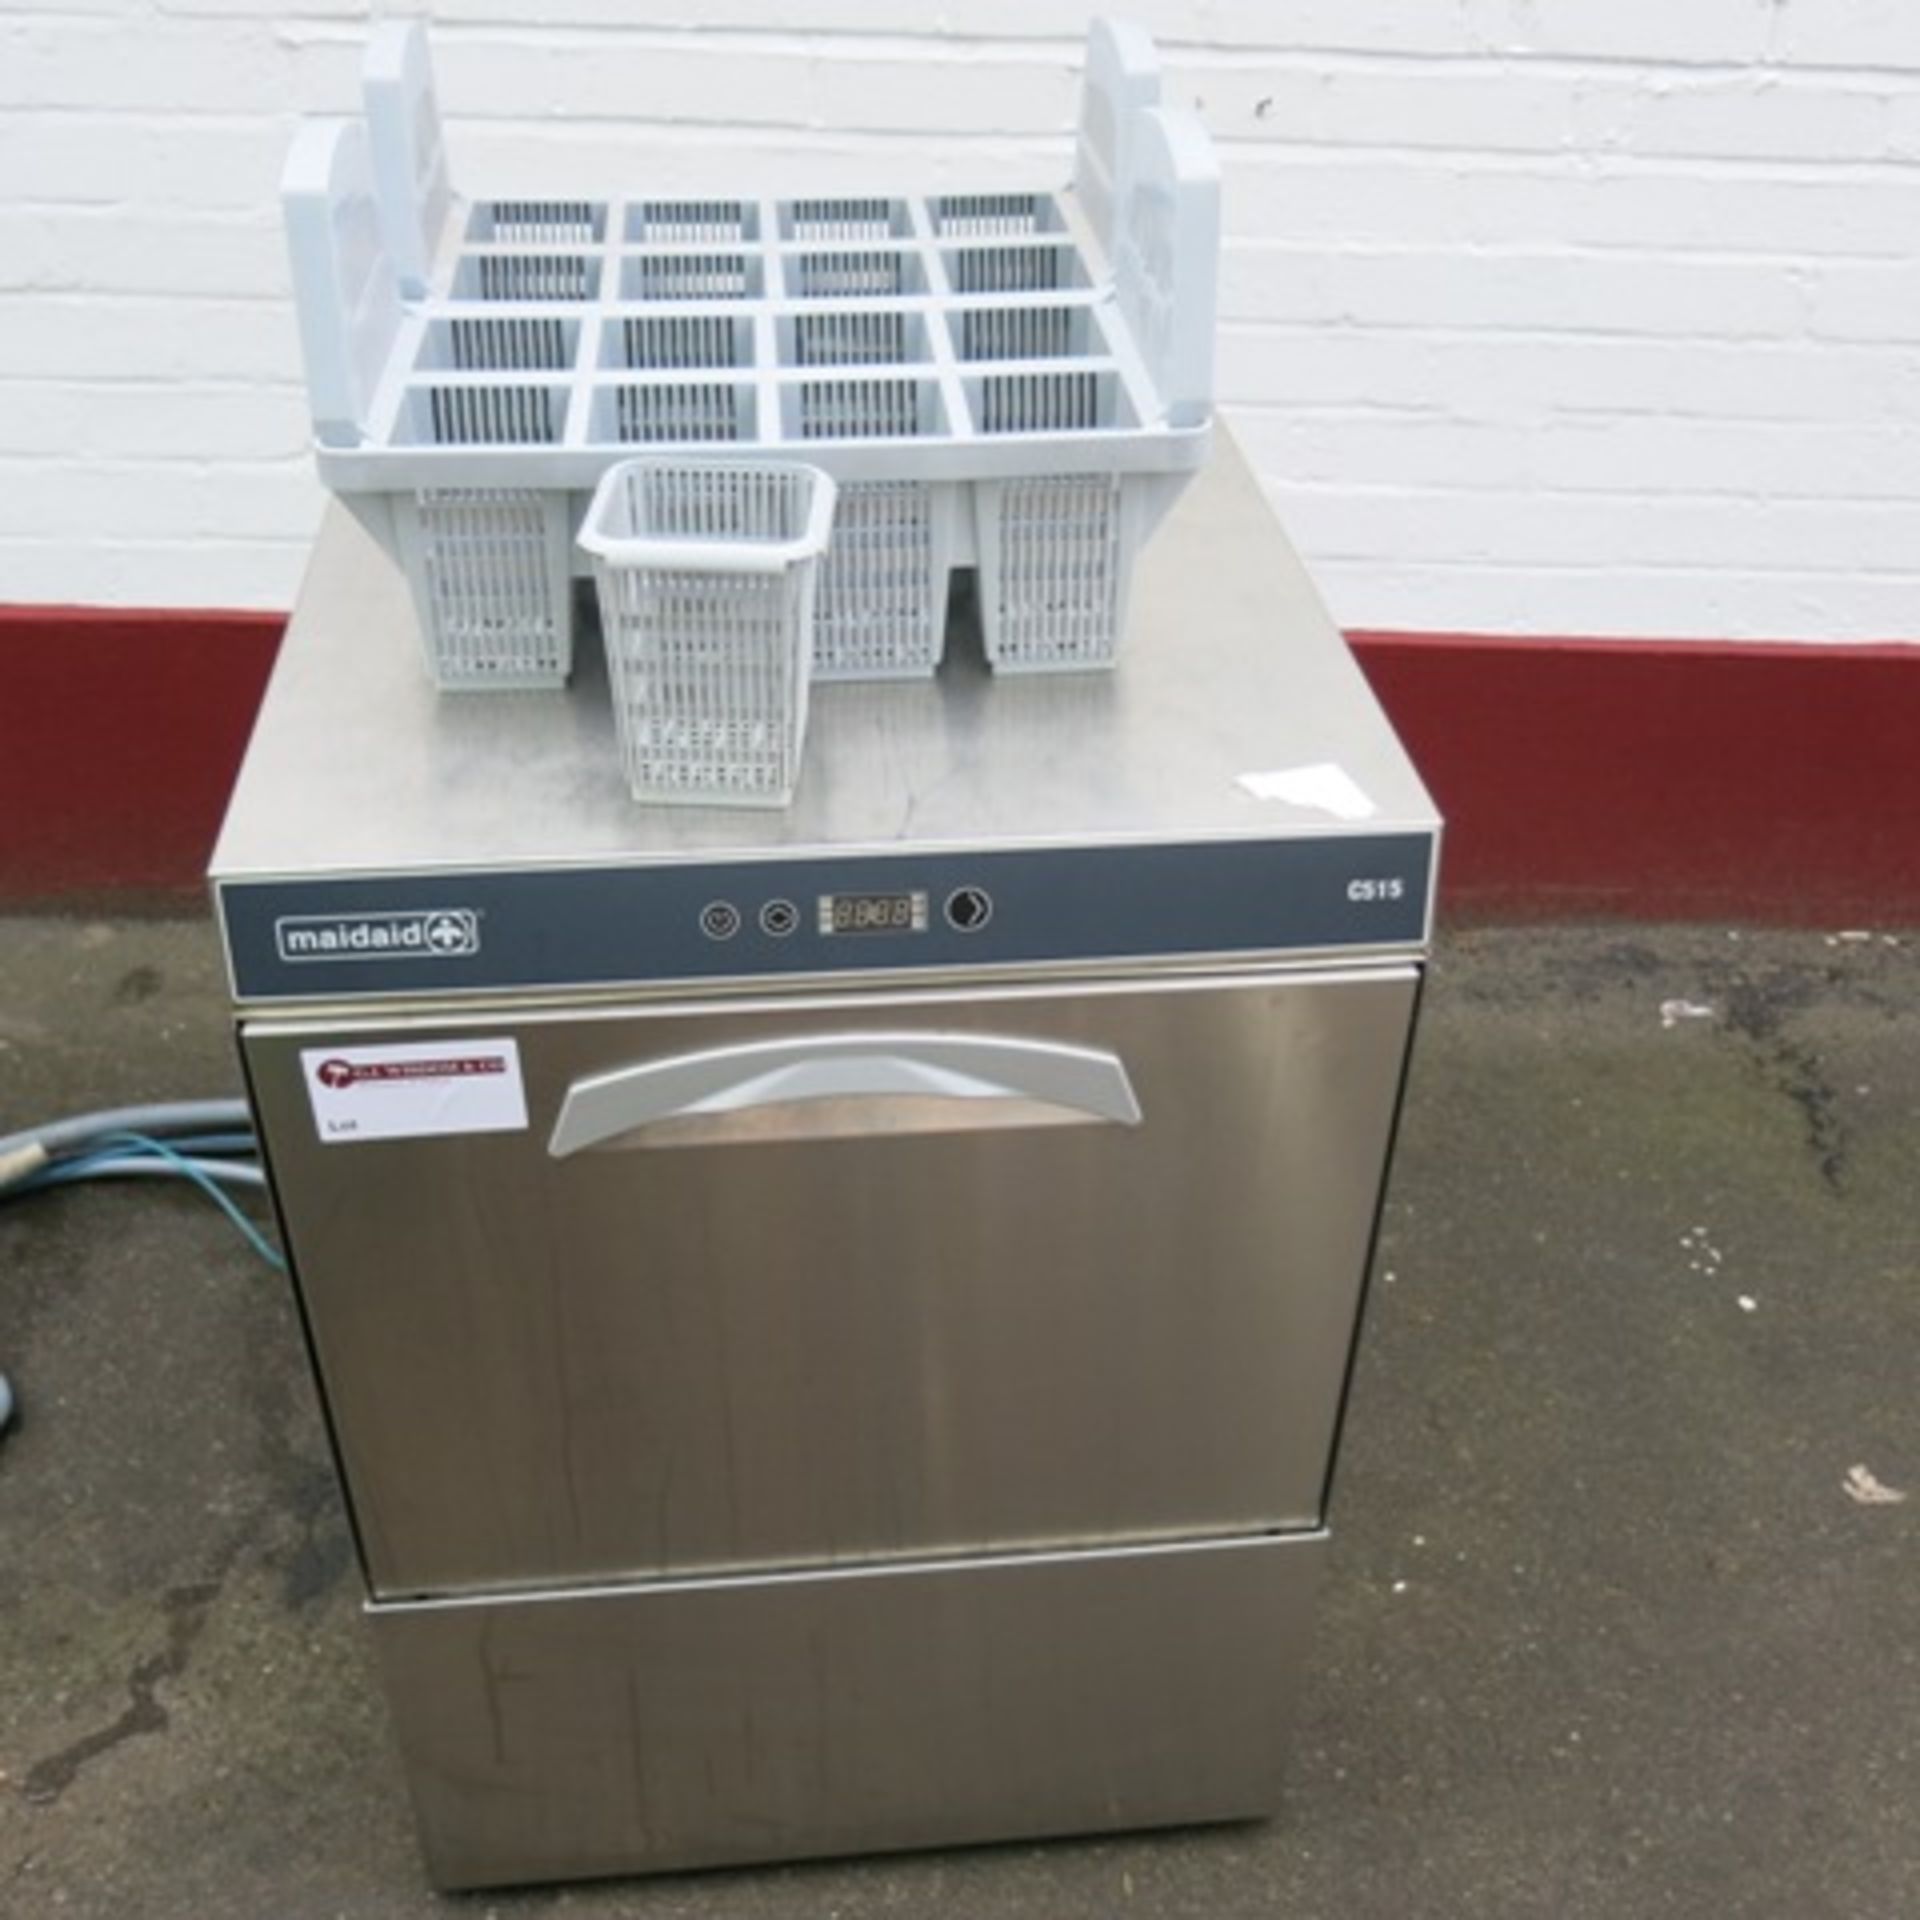 Maidaid Under Counter Front Loading Dishwasher, Model C515, Year 10/2016